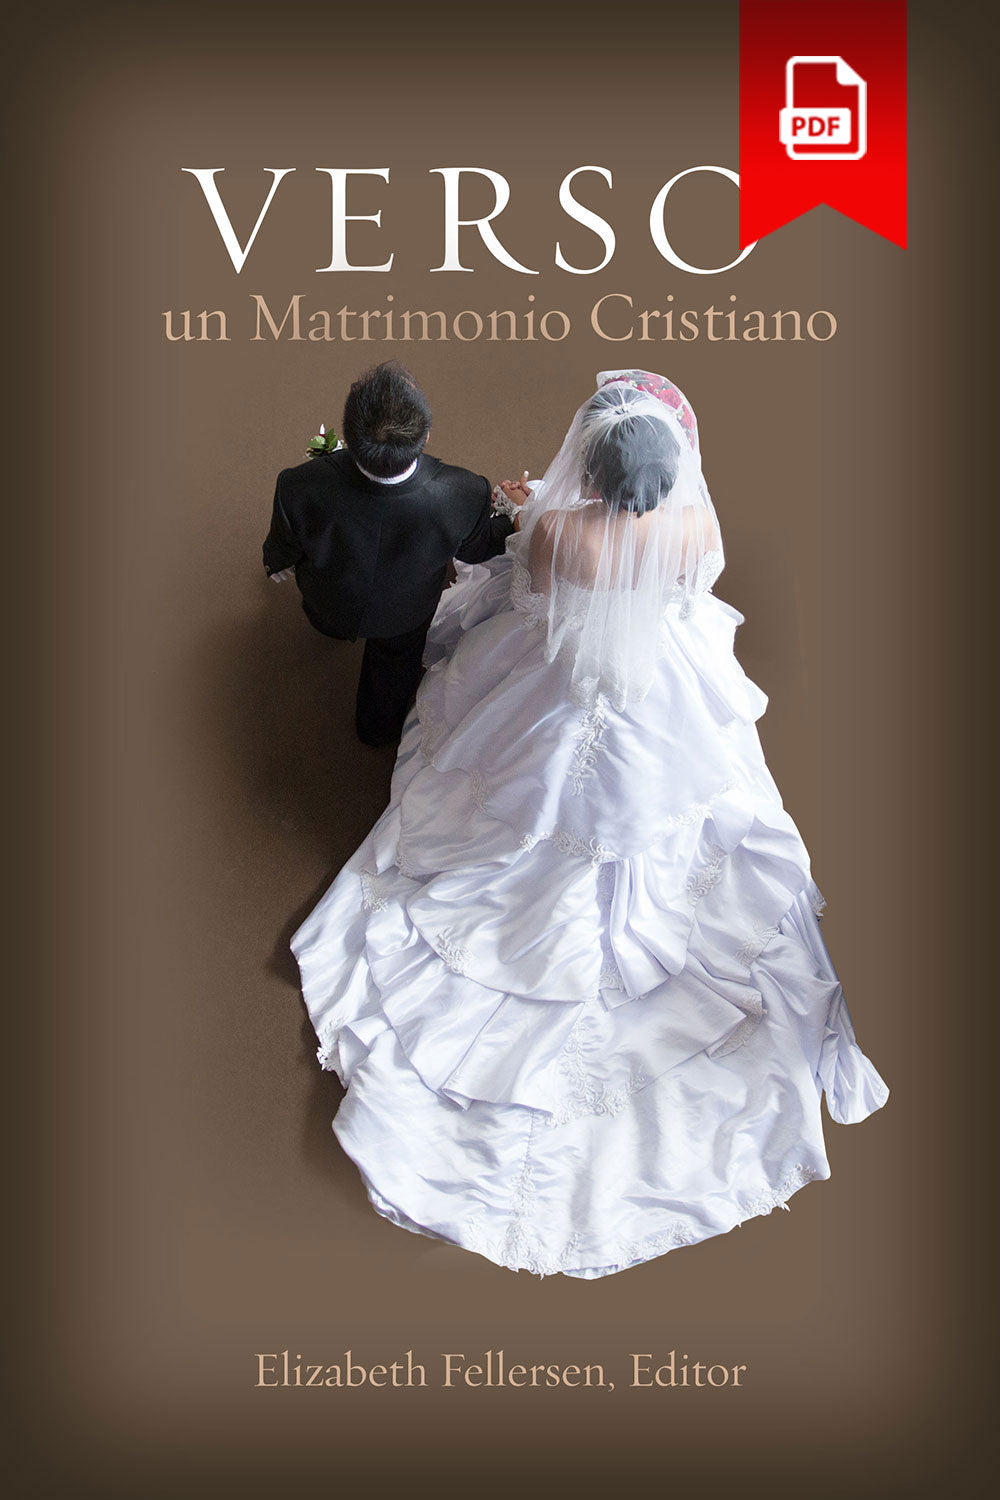 Towards A Christian Marriage (Verso un Matrimonio Cristiano)